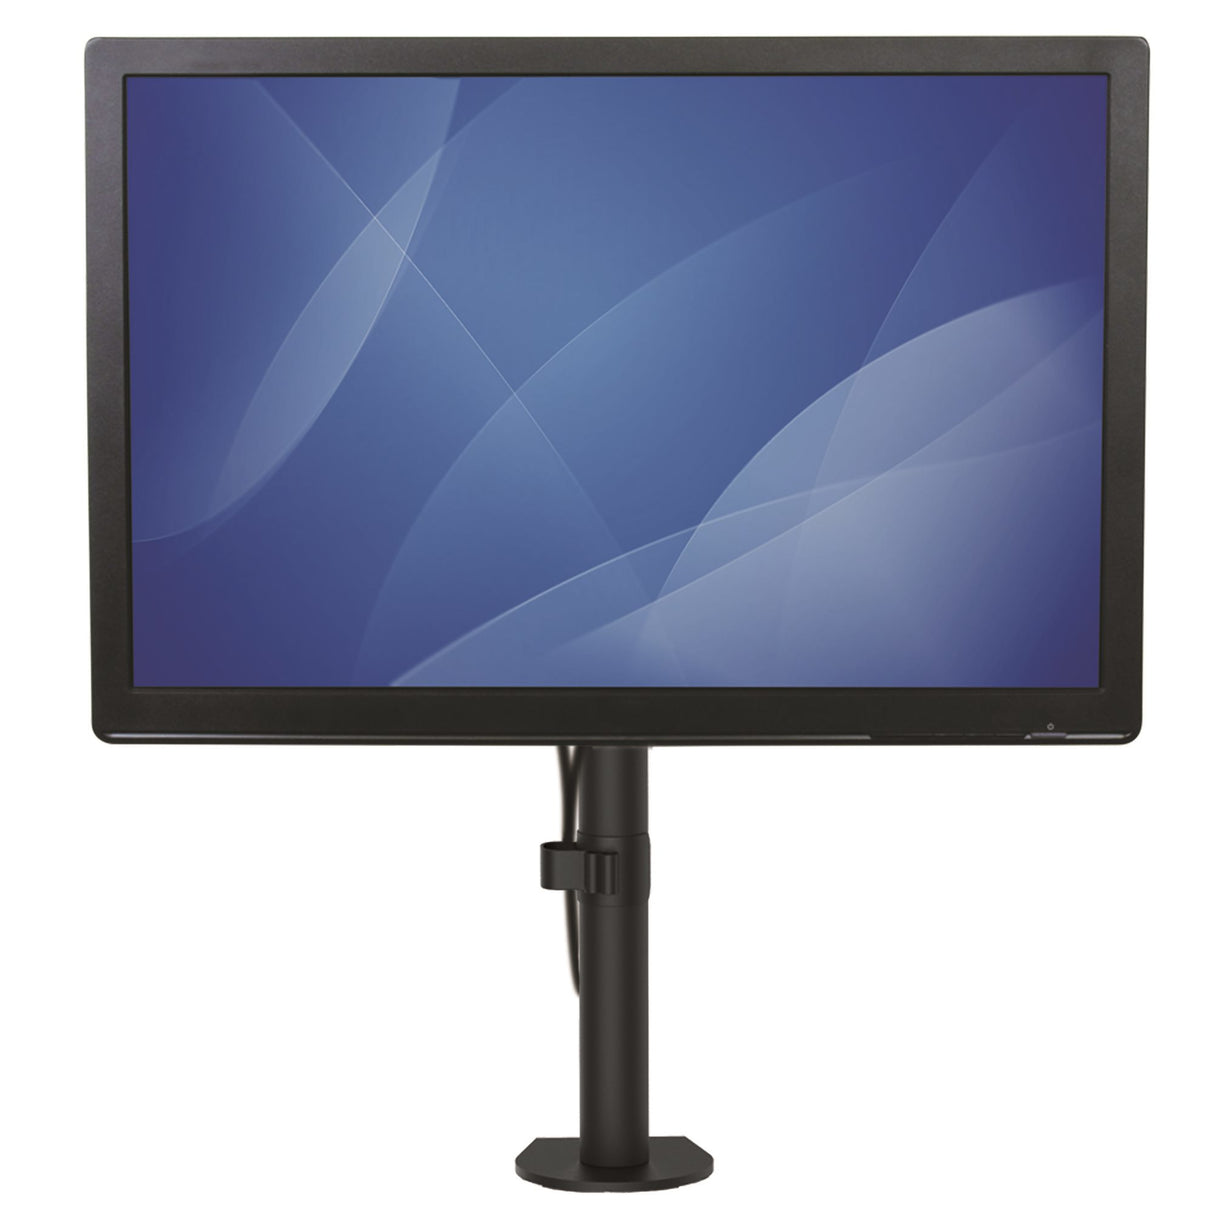 STARTECH Single Monitor Desk Mount - Single Screen Heavy Duty Pole Mount for up to 8kg VESA Compatible Displays - Ergonomic Height Adjustable Monitor Arm Mount - Desk Clamp|Grommet (ARMPIVOTV2) (ARMPIVOTV2)